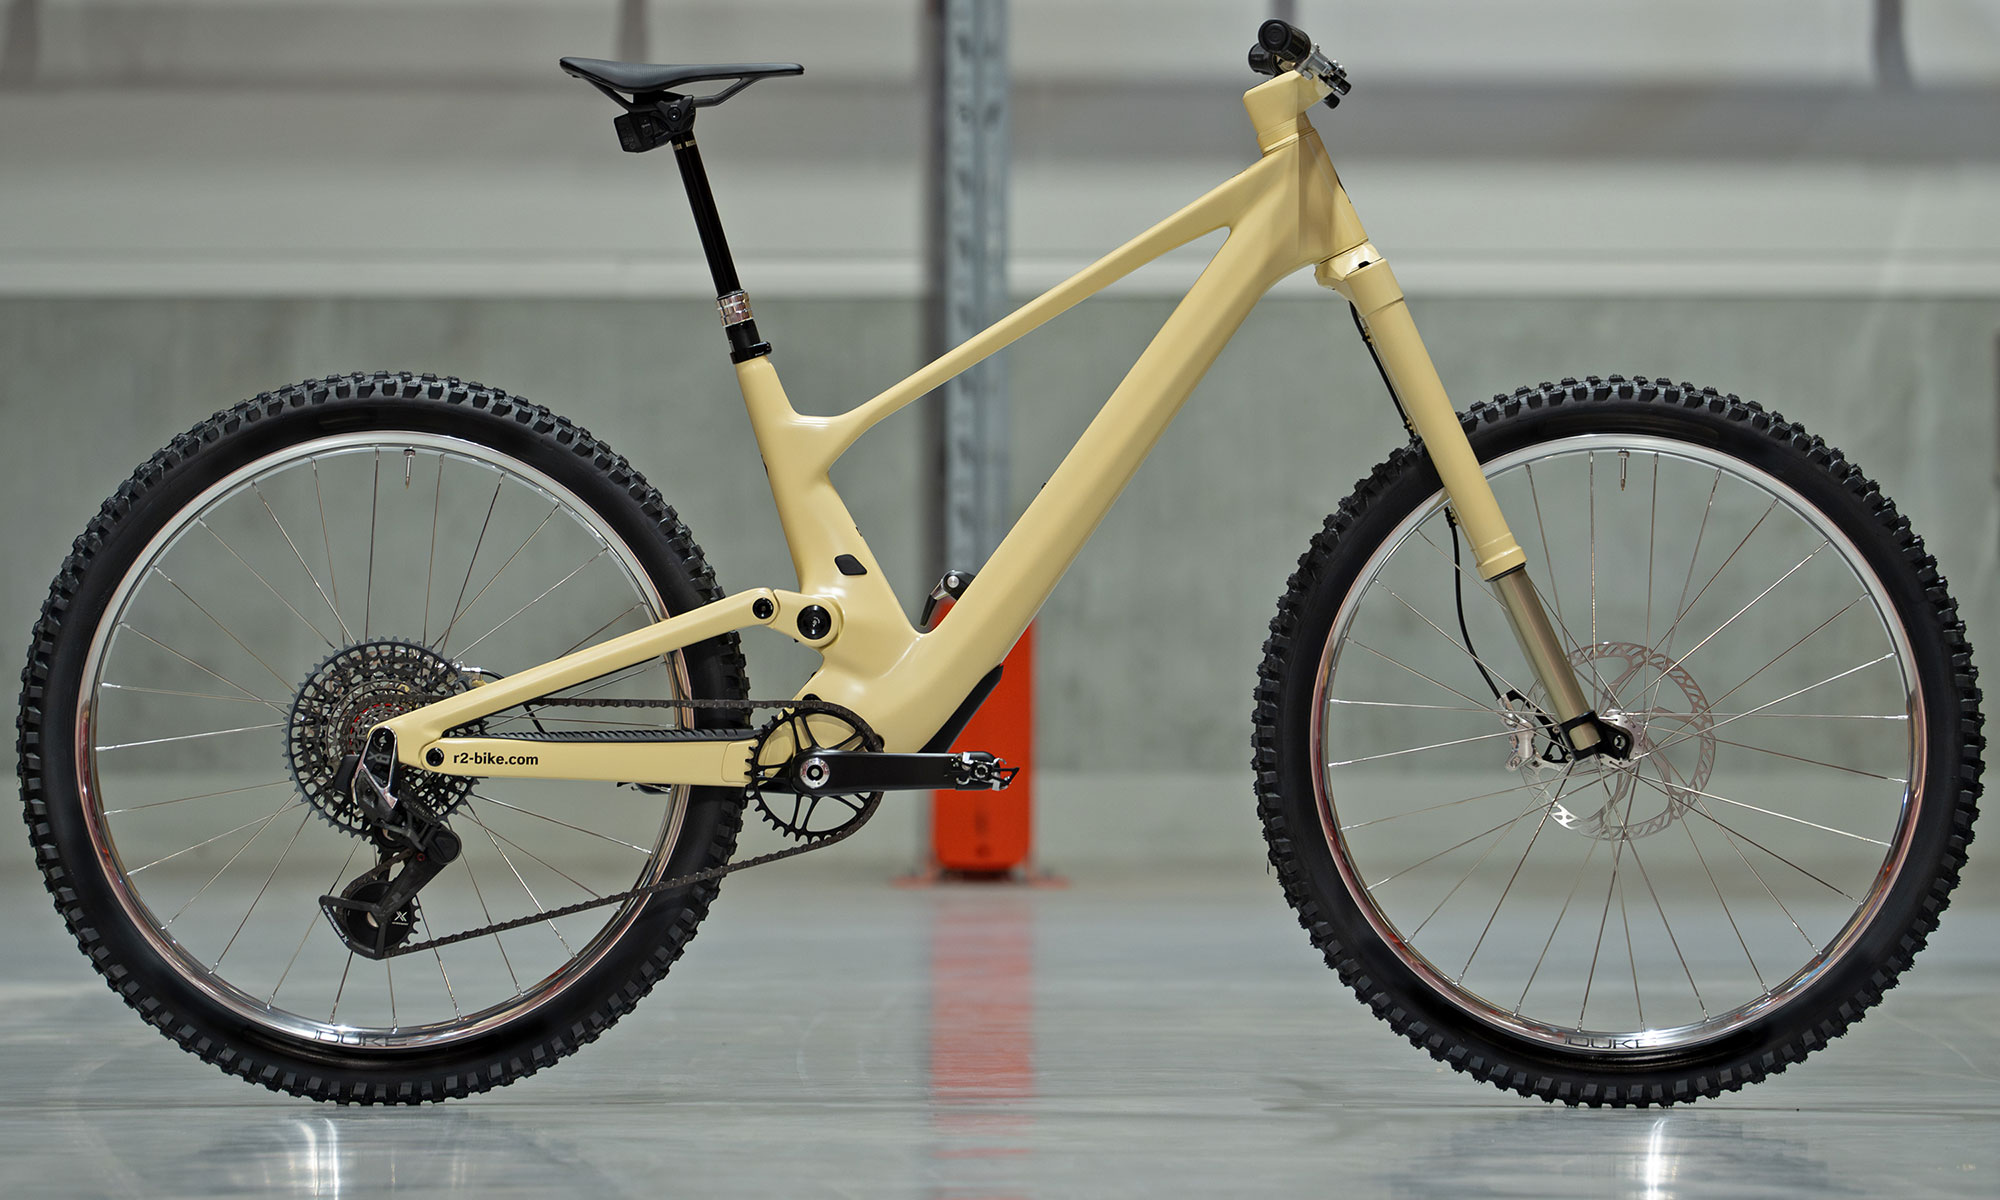 Dangerholm Scott Genius ST custom all-mountain bike of the future project, complete